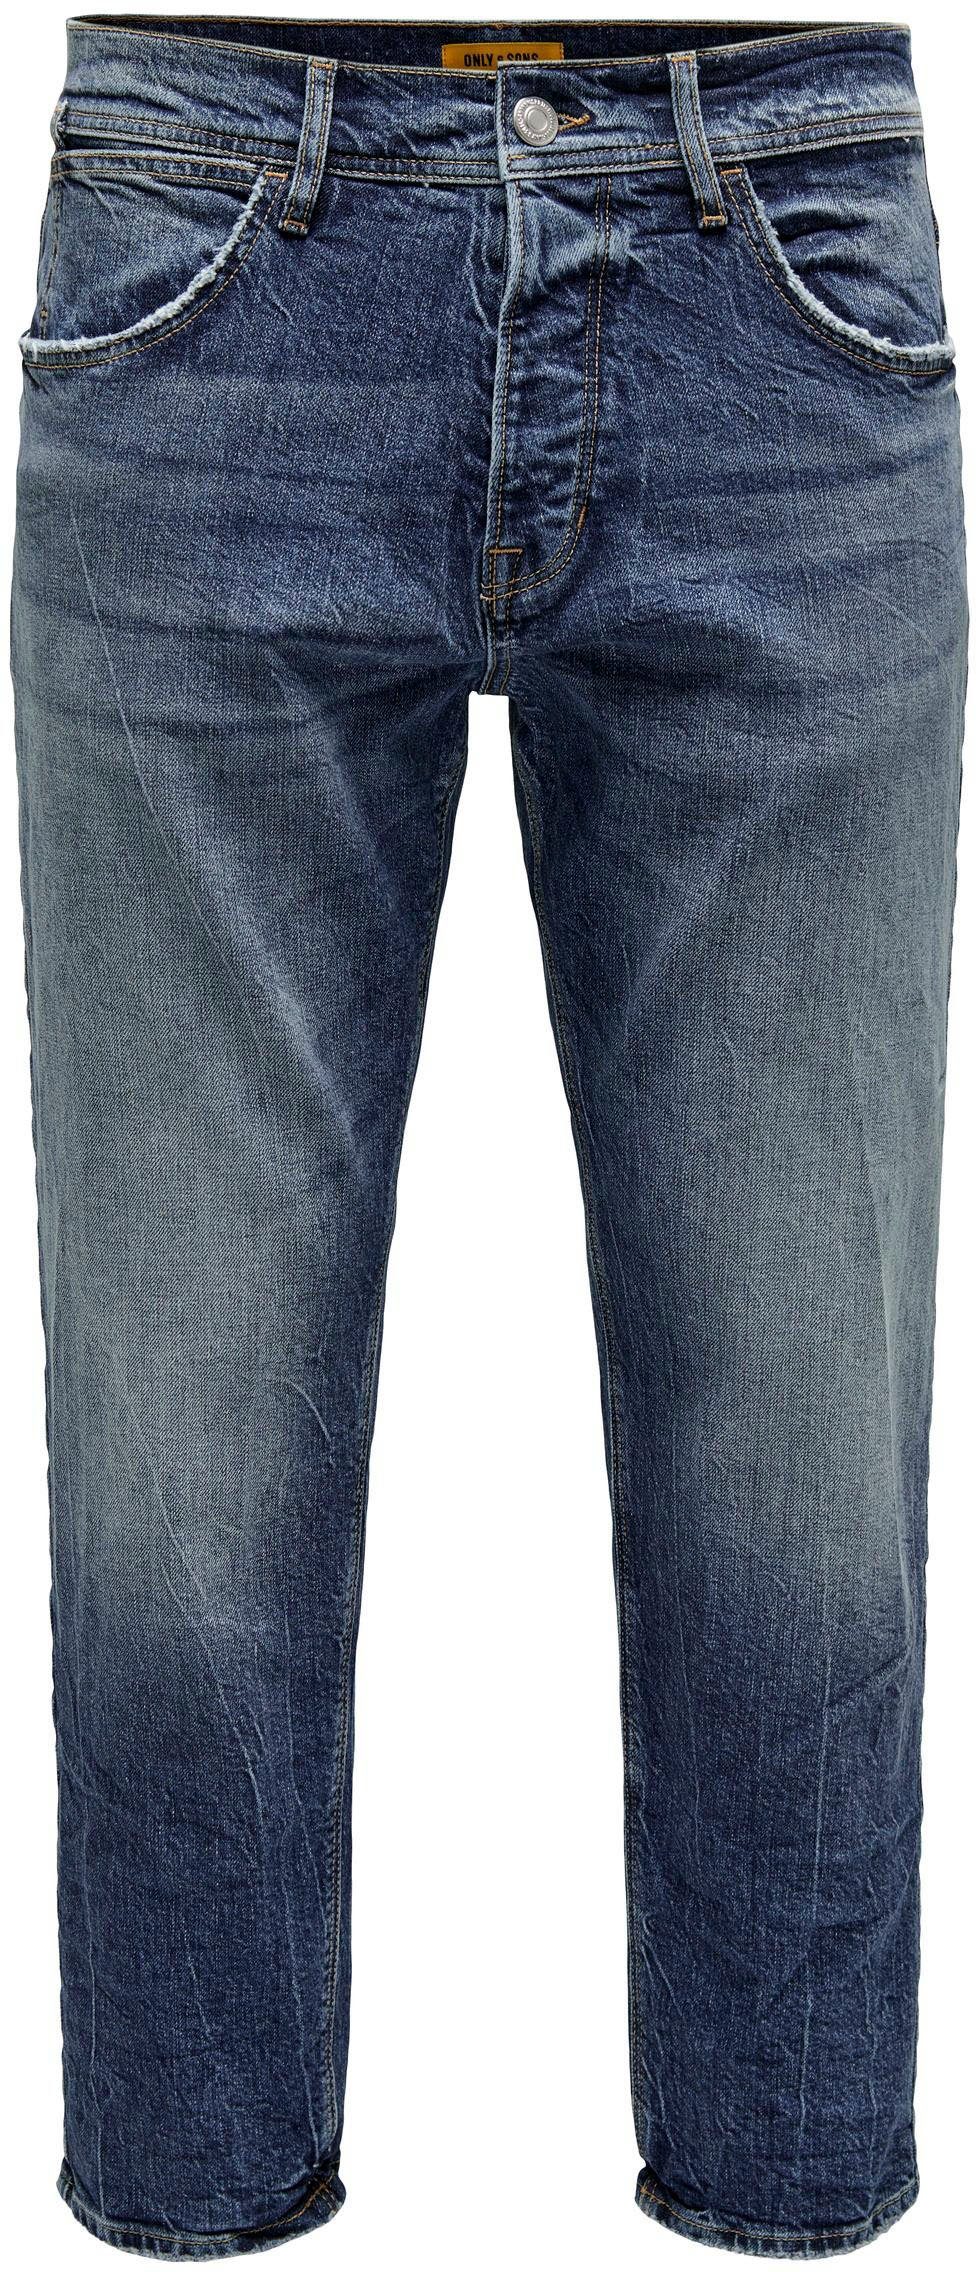 ONLY & SONS 5-Pocket-Jeans BLUE JEANS ONSAVI dark medium COMFORT L. blue 4934 NOOS